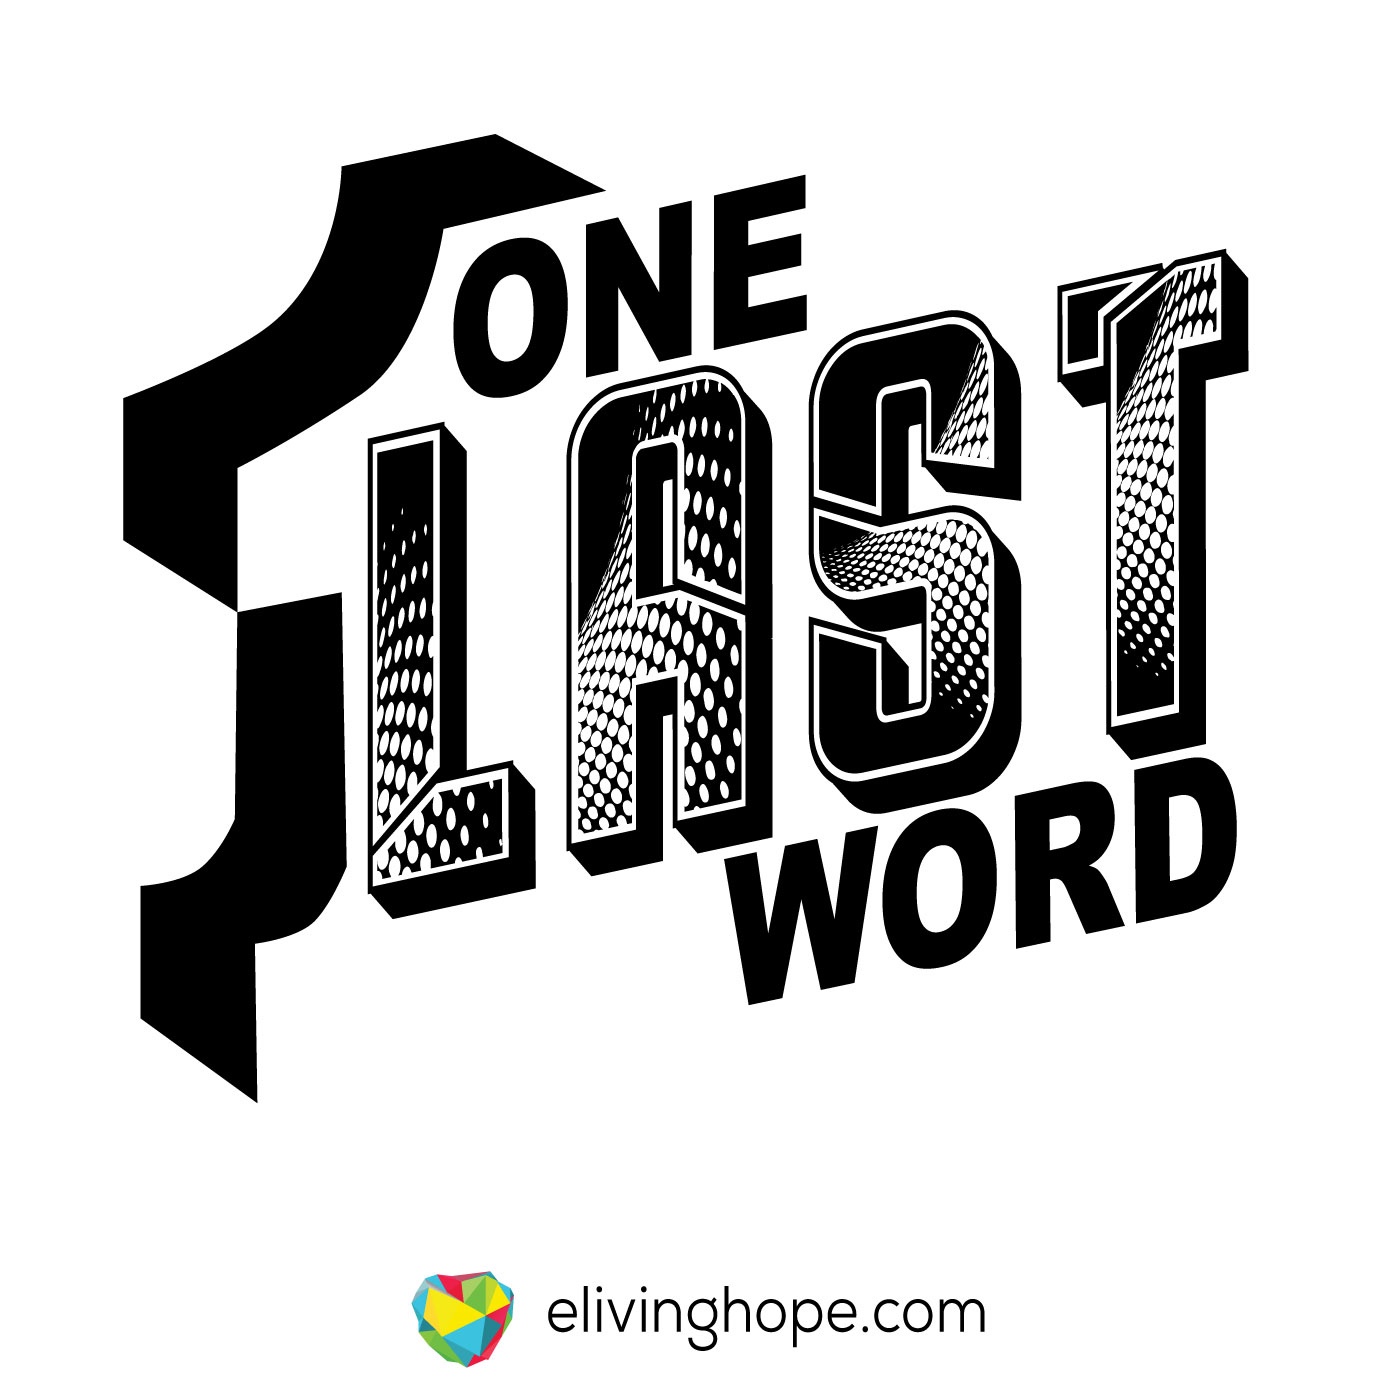 One Last Word